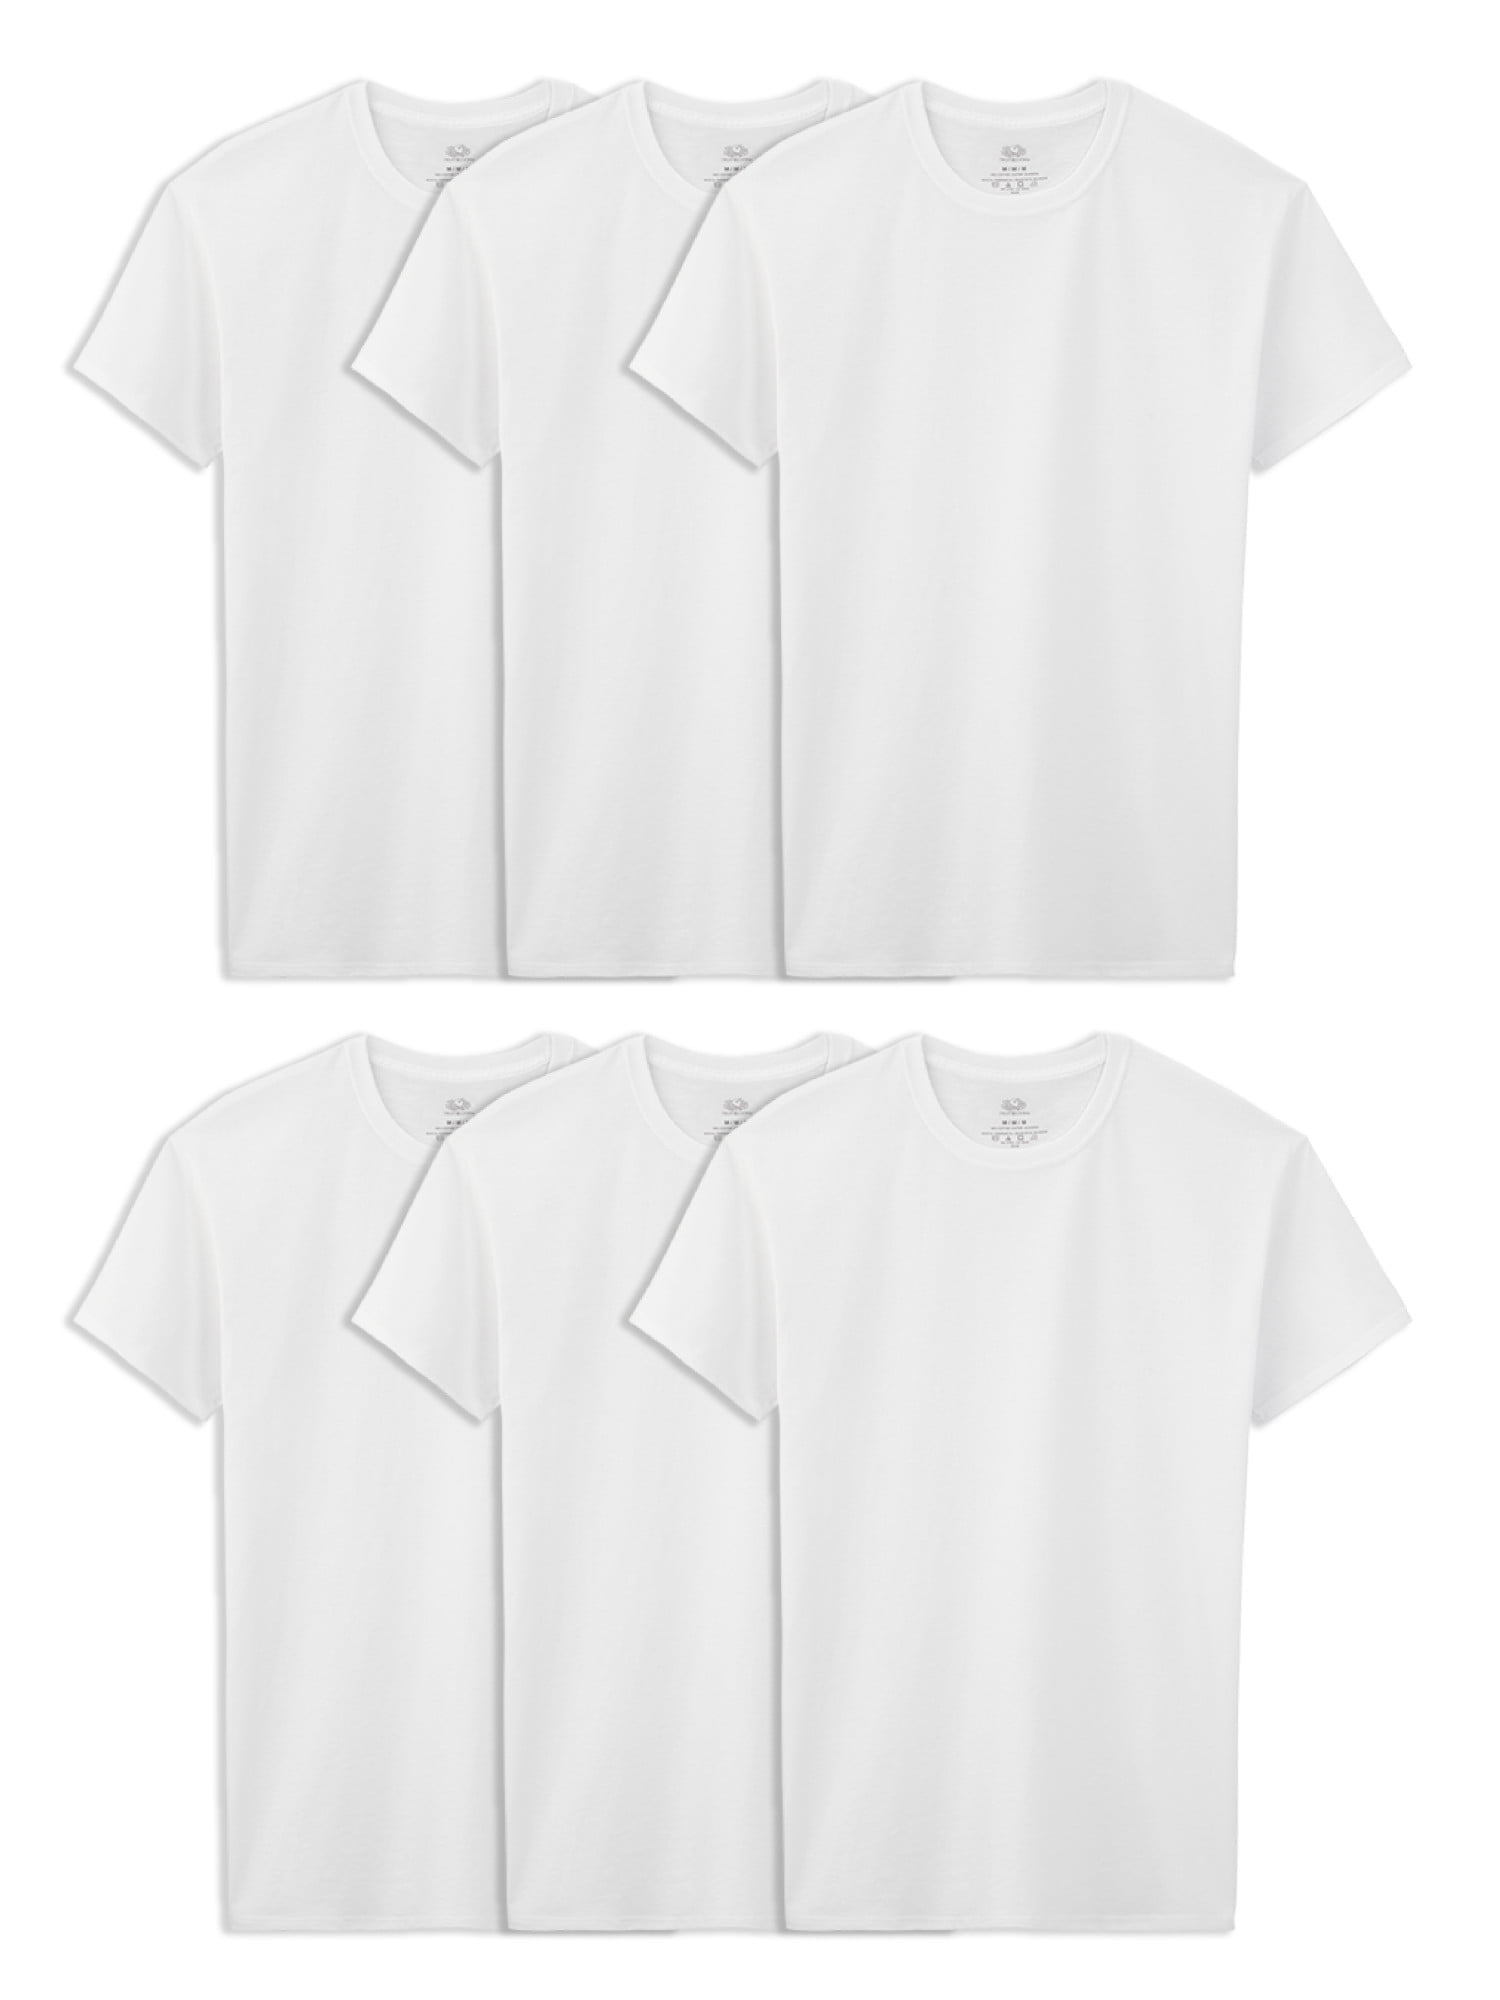 Faded Glory Boys' Crew T-Shirt 5 Pack Size XL XG 18-20 White Tee 